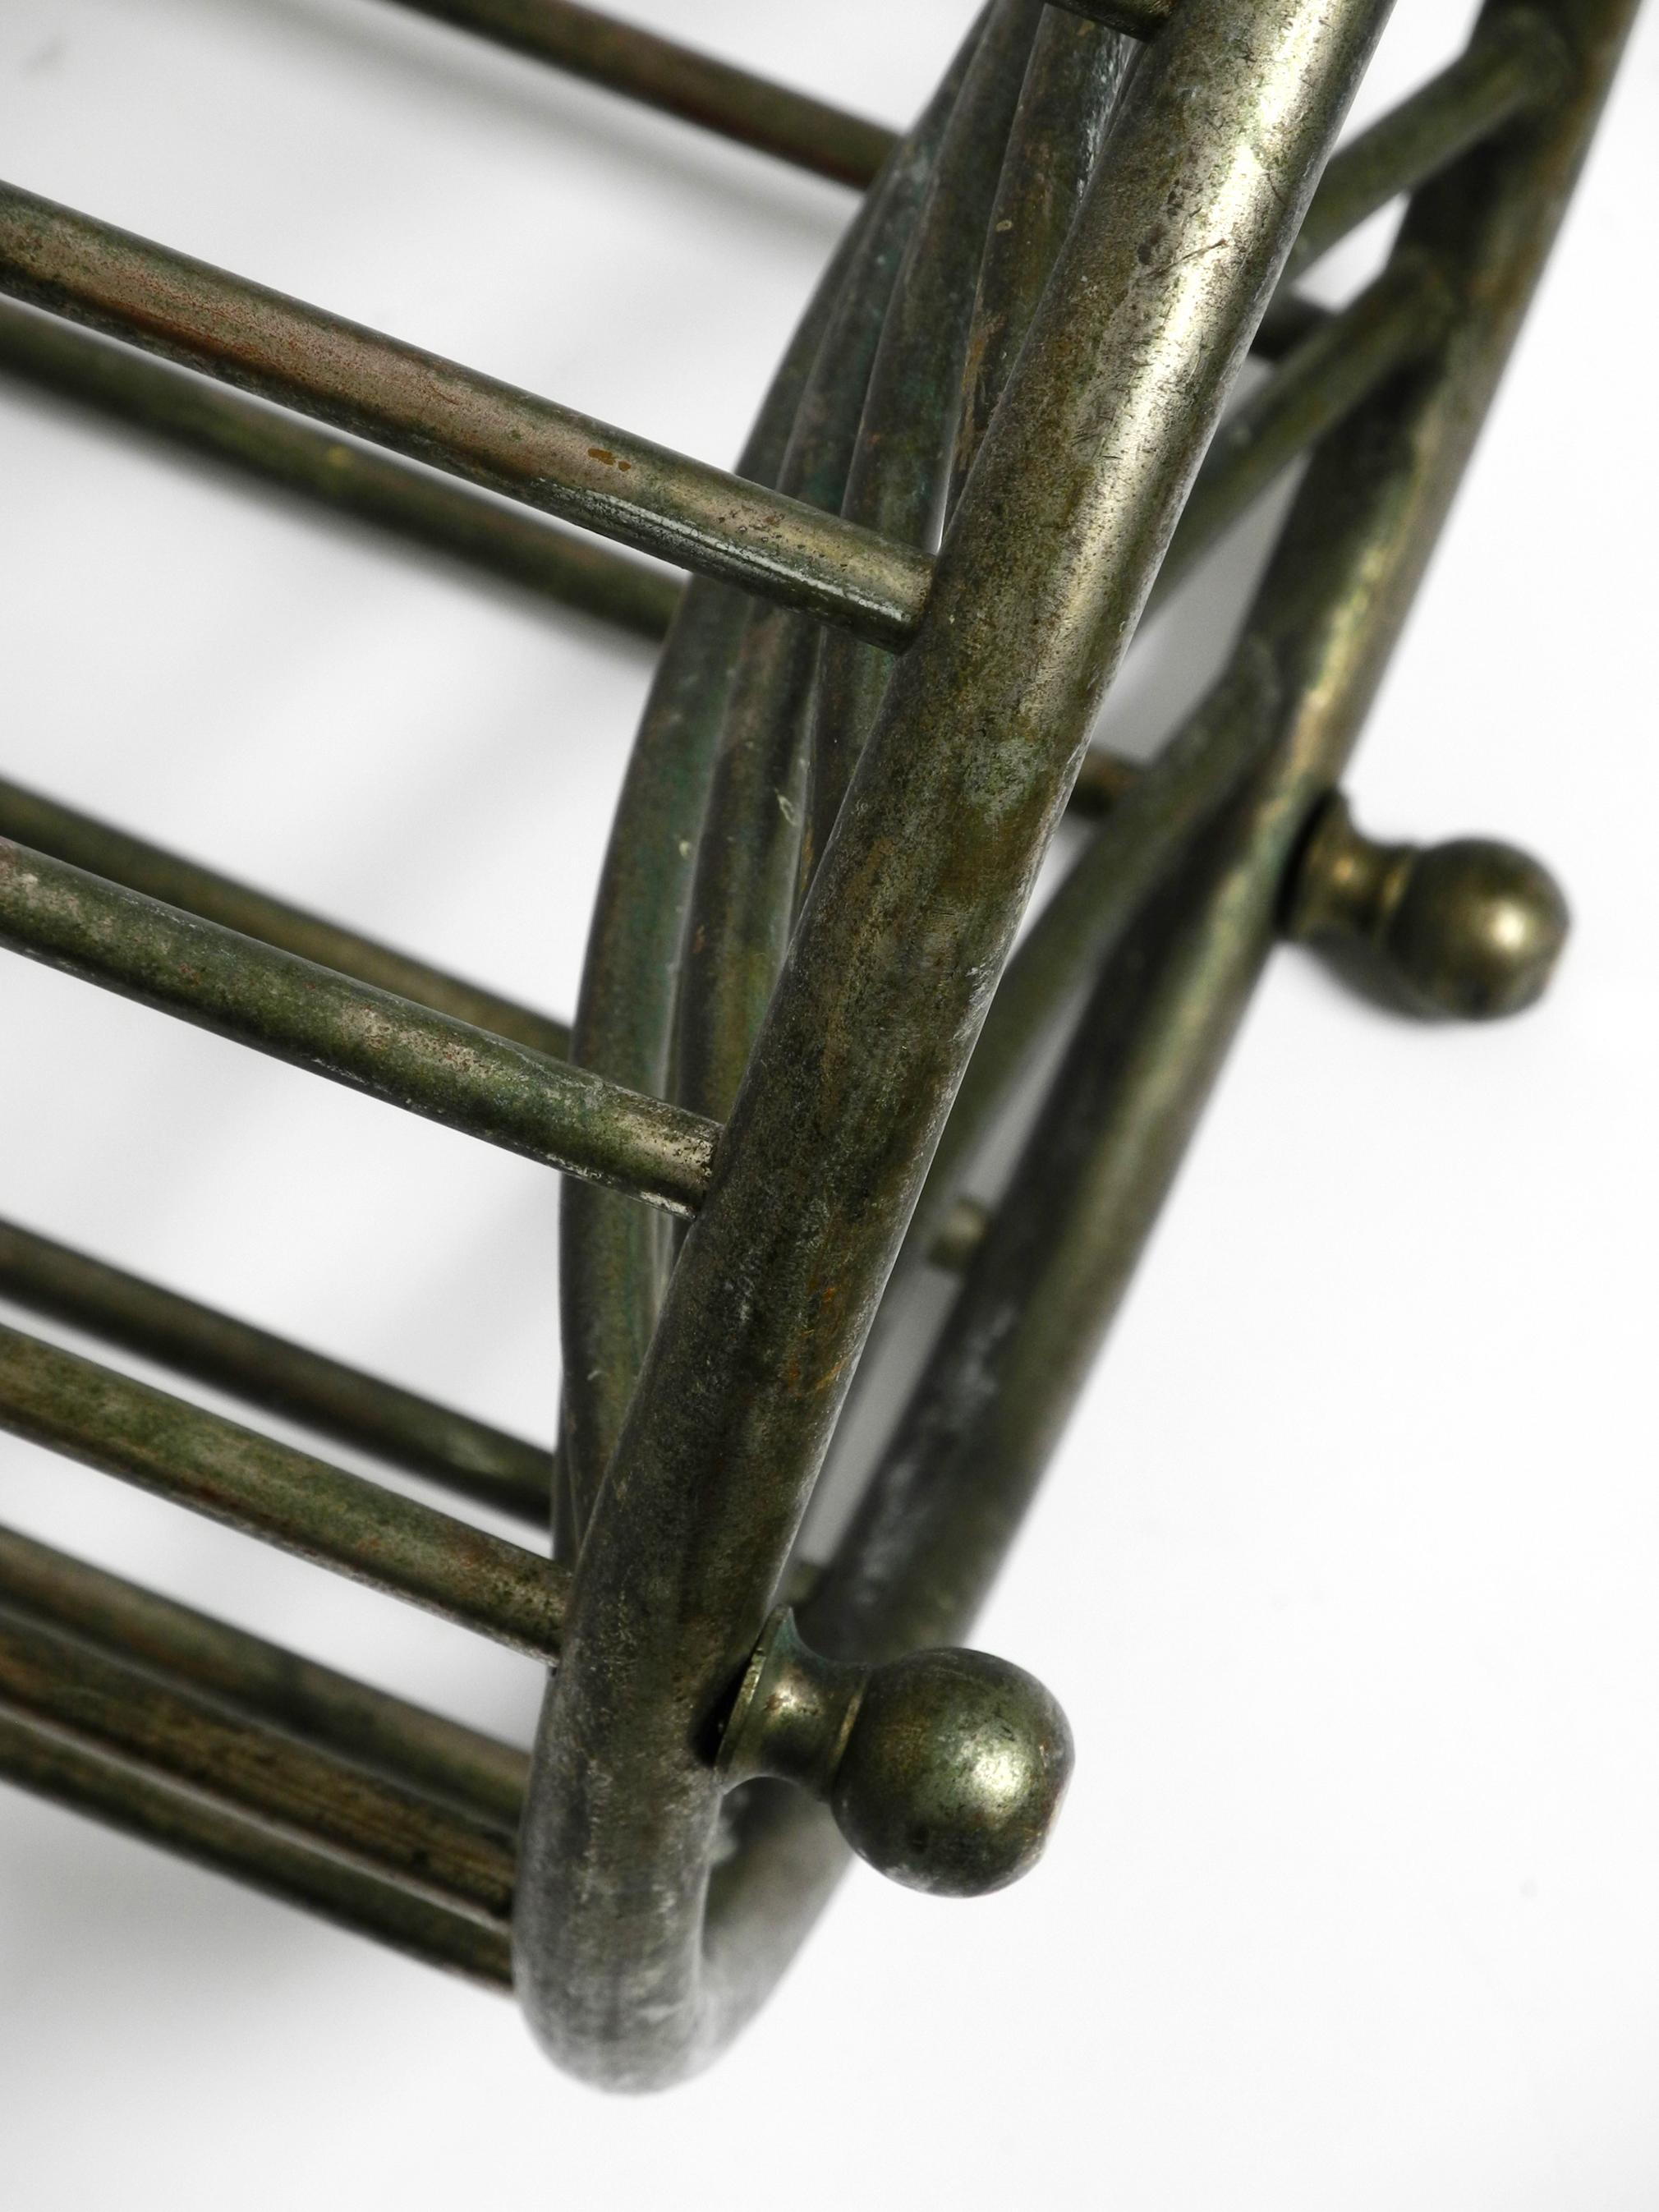 Original Mott's Plumbing Towel Basket Made of Nickel-Plated Brass from the 1910s 9